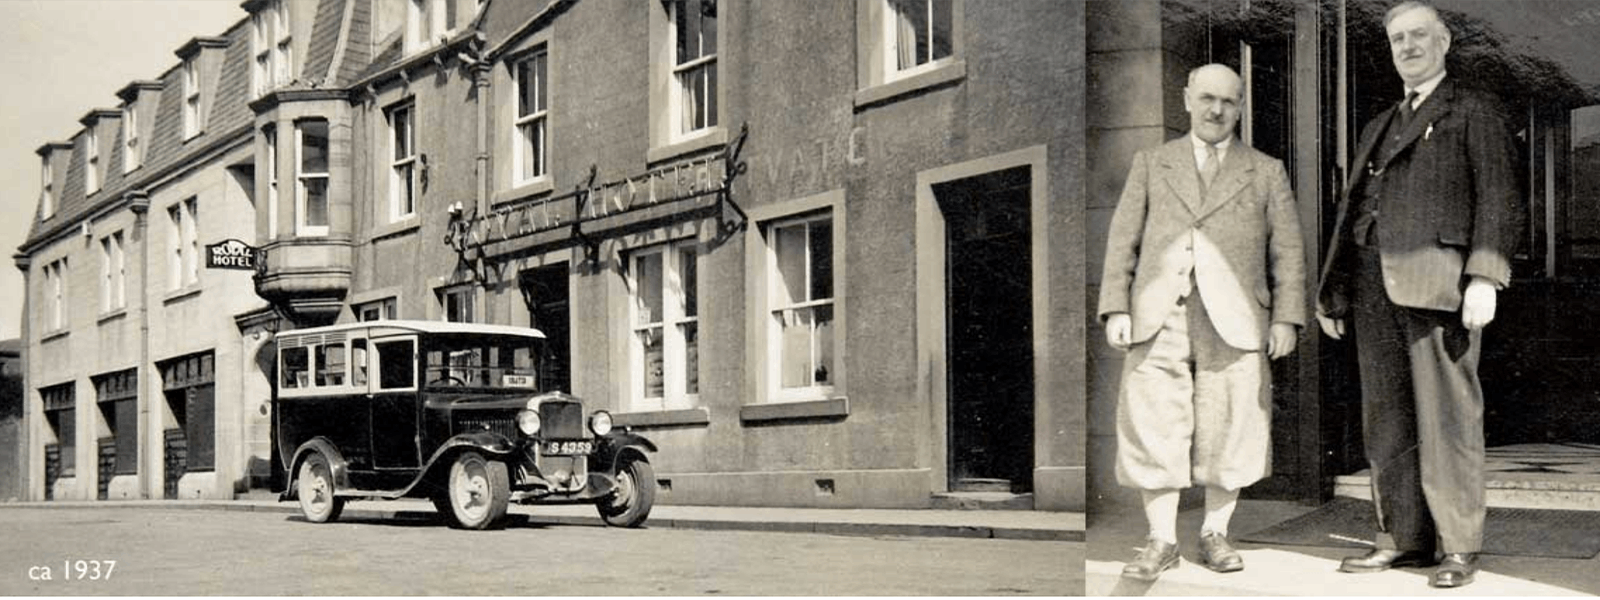 Old photo of the Royal hotel circa 1937.